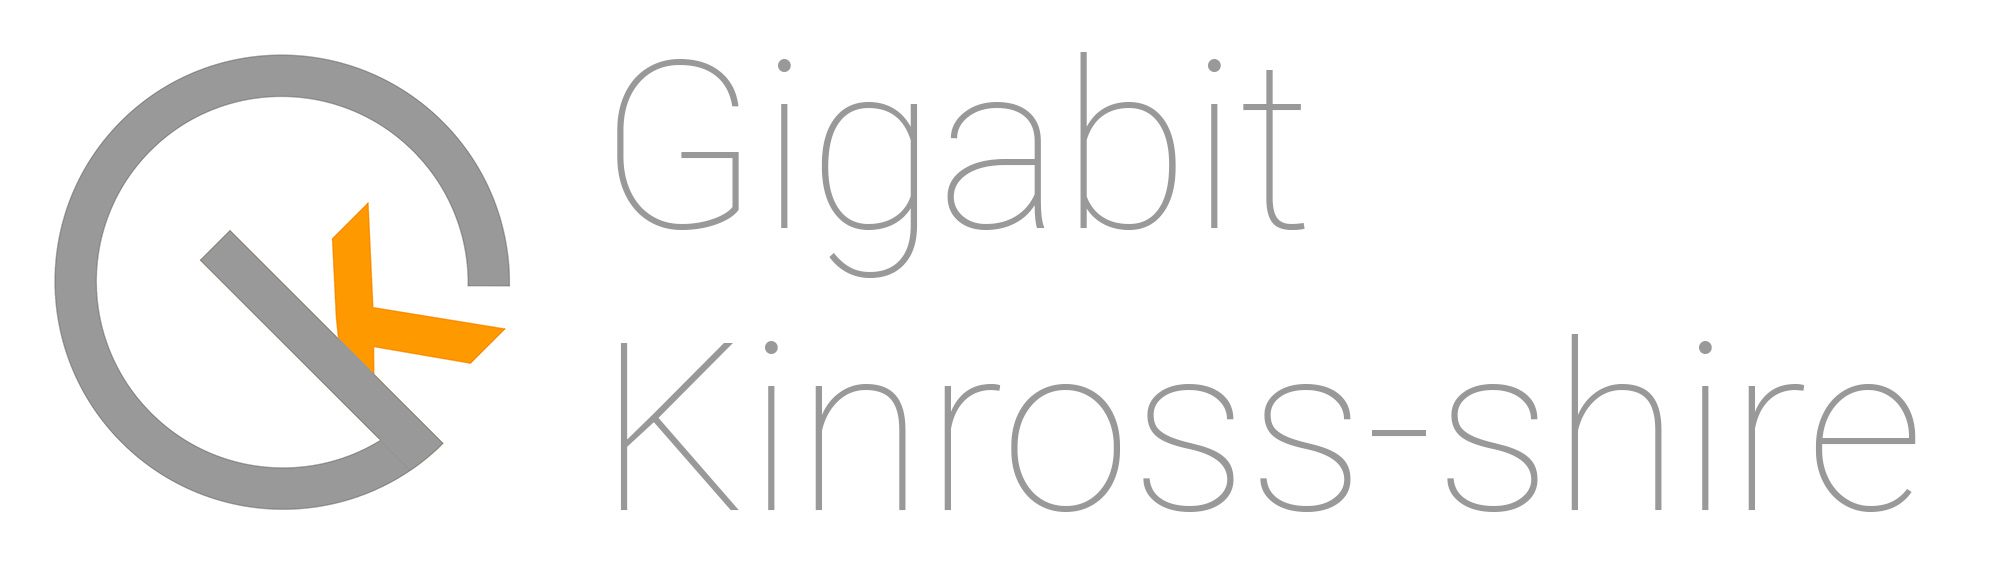 Gigabit Kinross-shire